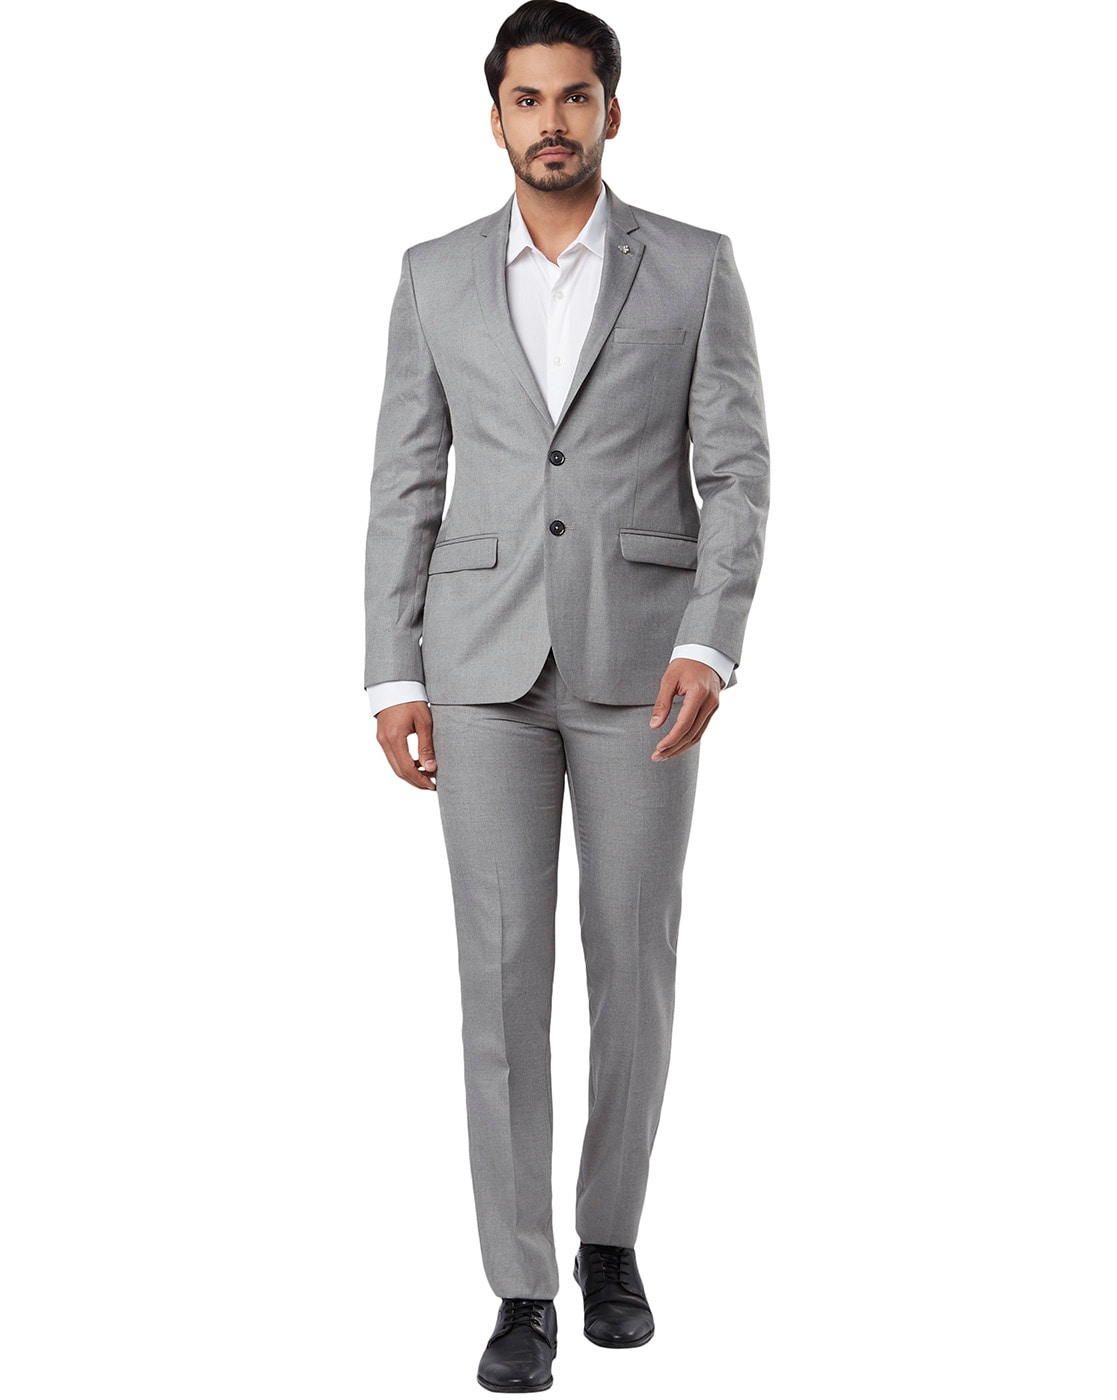 Buy Premium formal & Wedding suits for men Online - Blackberrys-as247.edu.vn